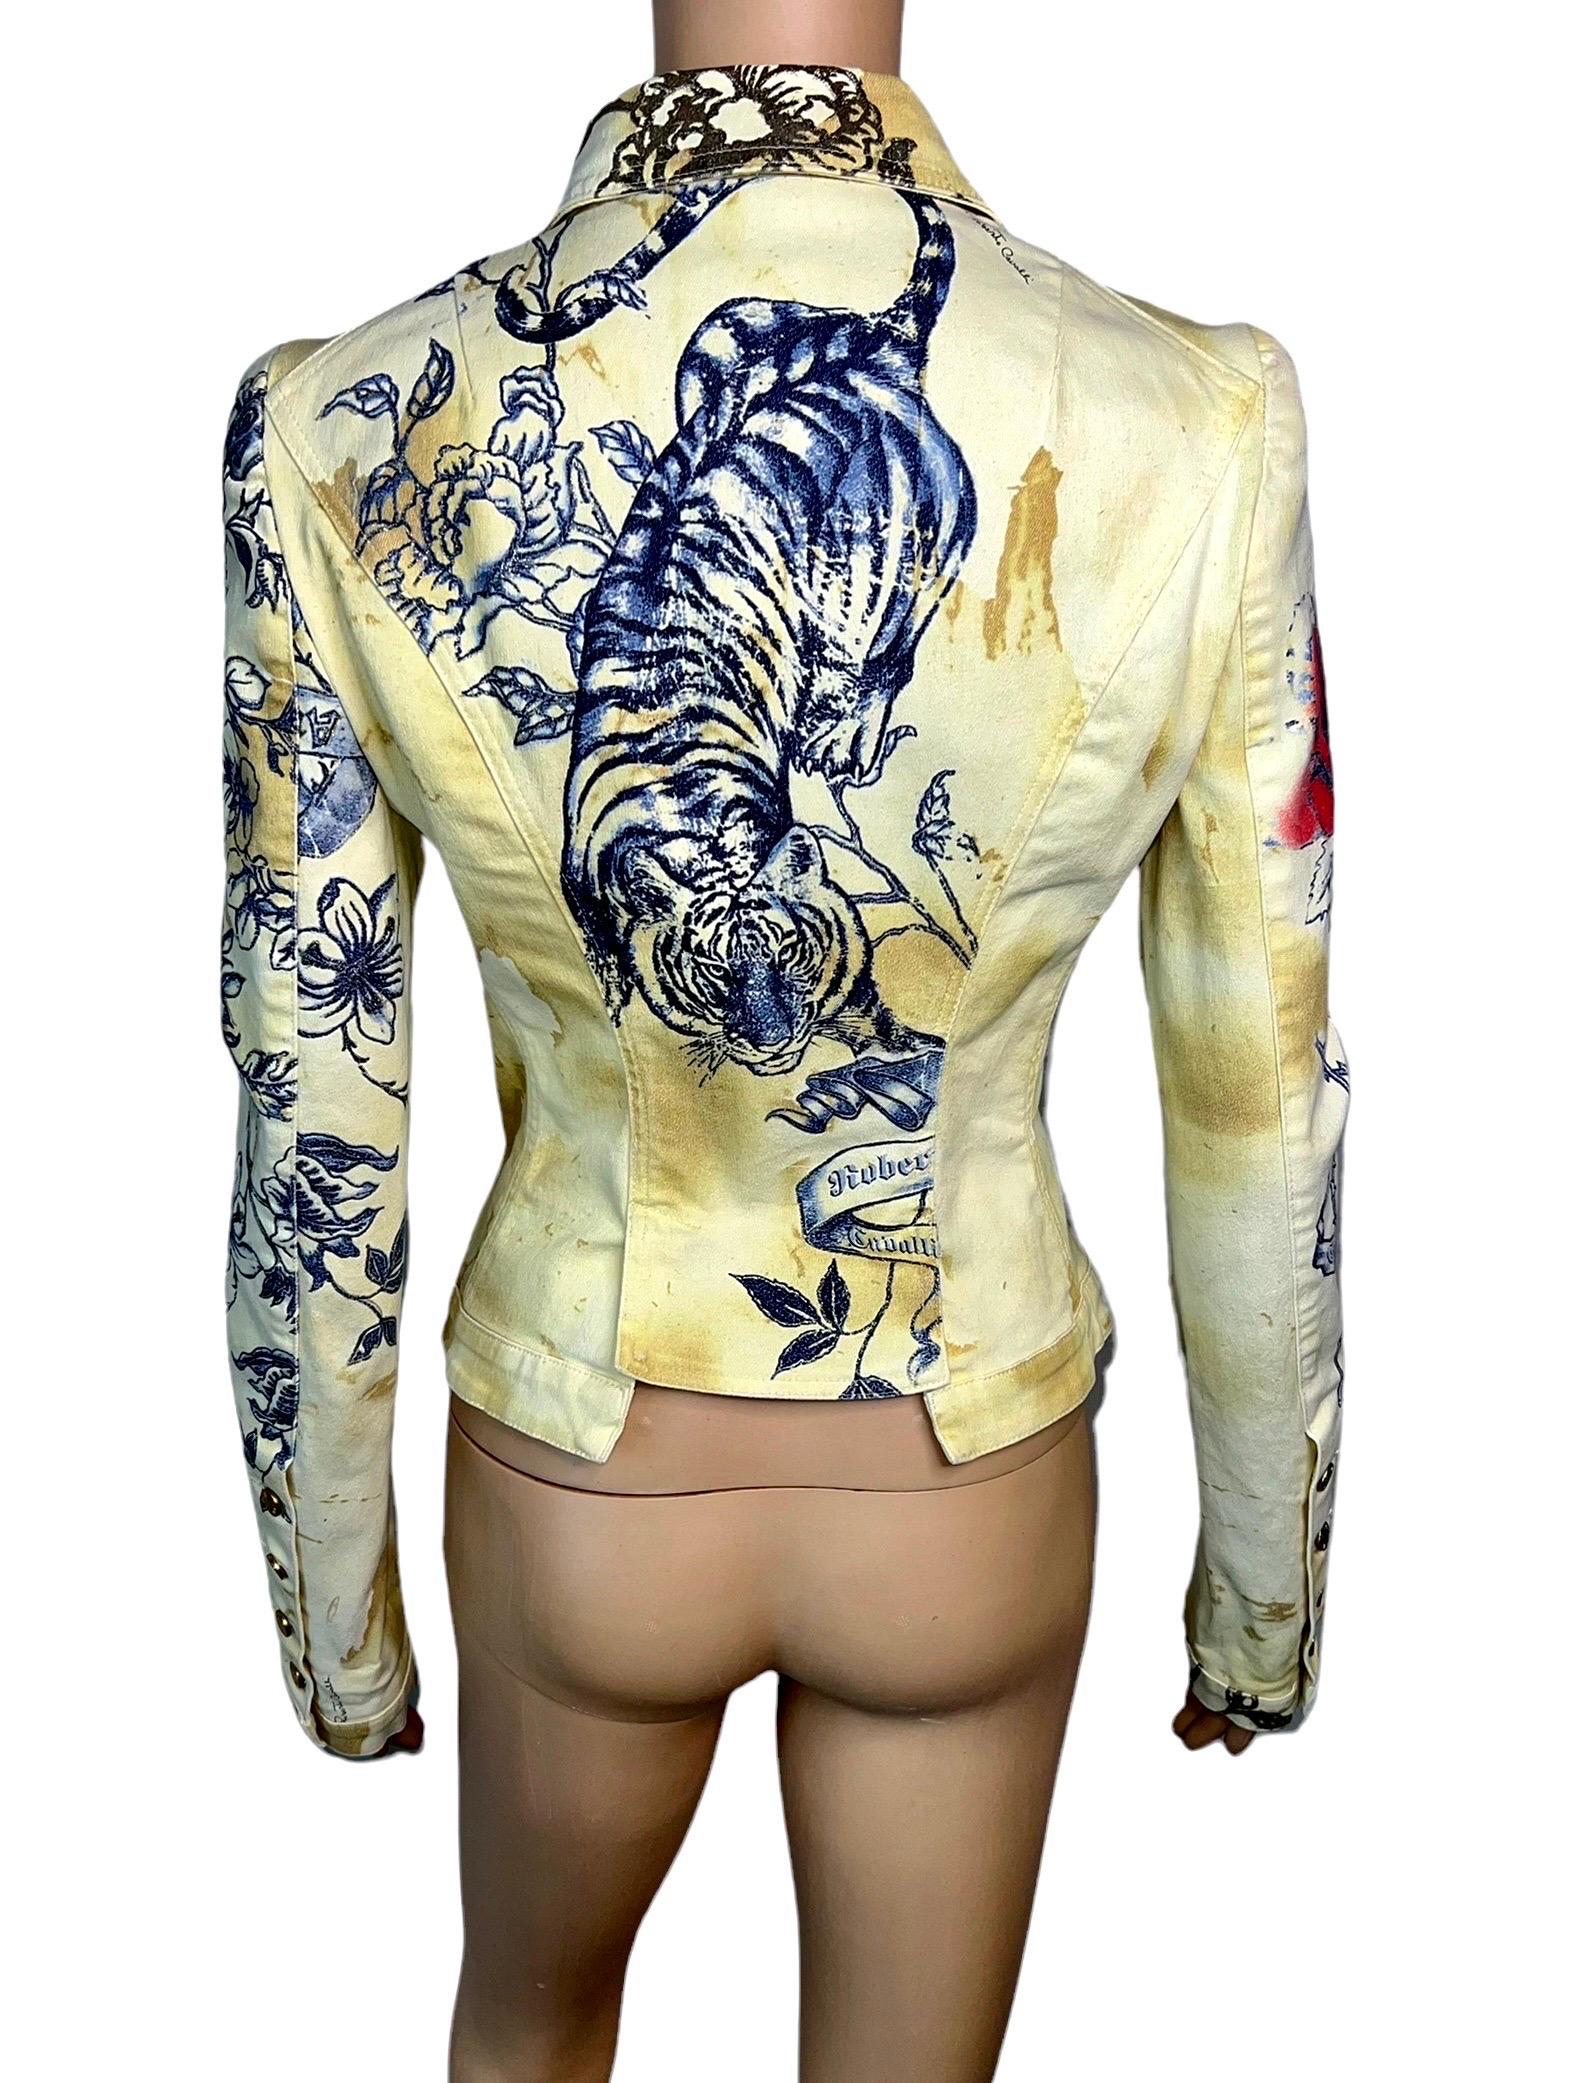 Roberto Cavalli S/S 2003 Tattoo Print Denim Jacket Coat  In Excellent Condition For Sale In Naples, FL